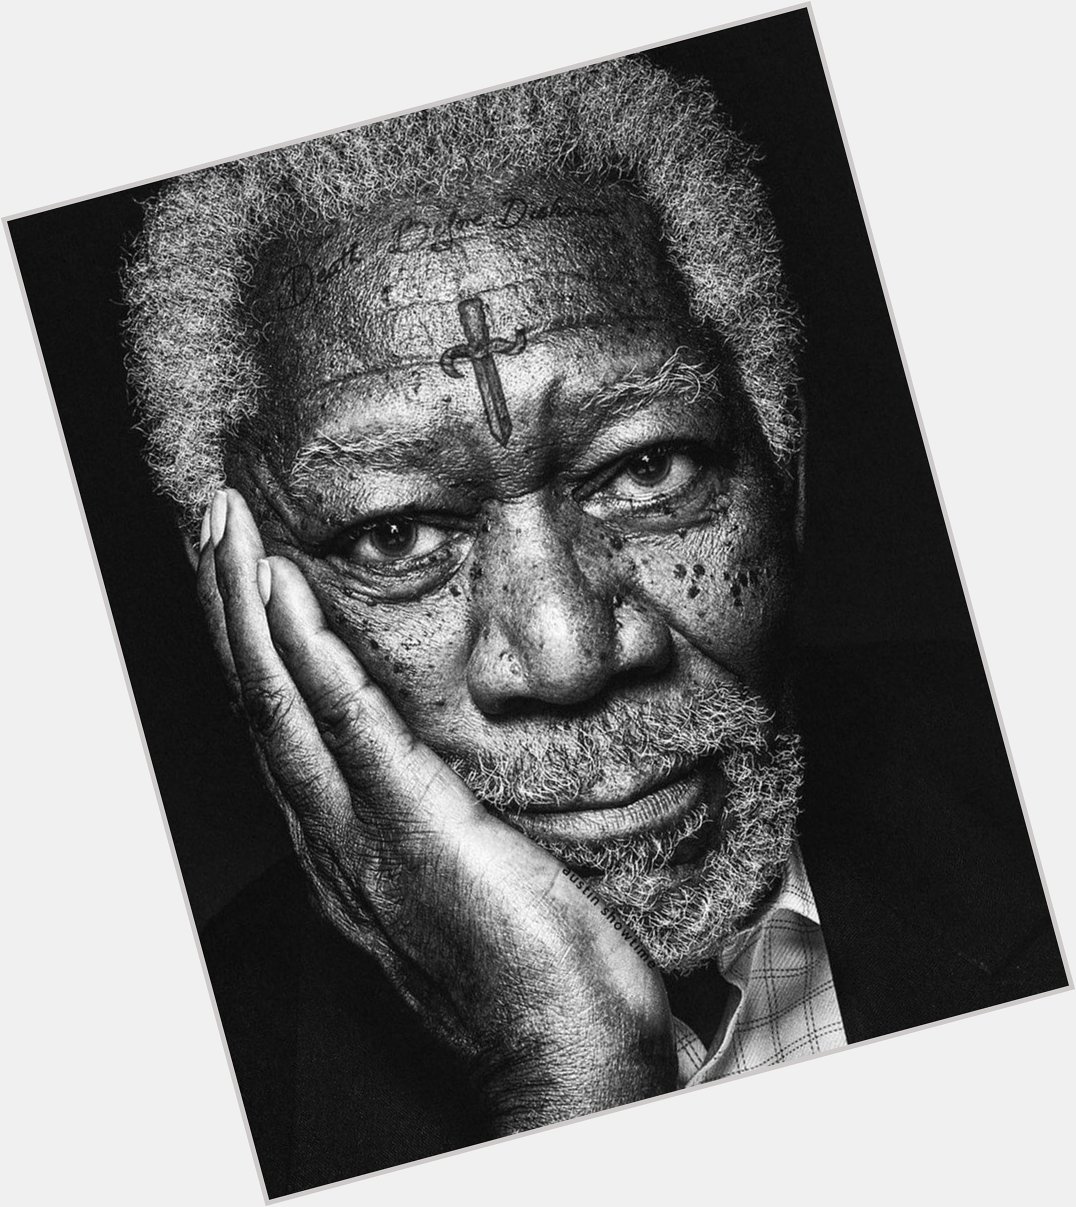 Happy 85th birthday, Morgan Freeman! 